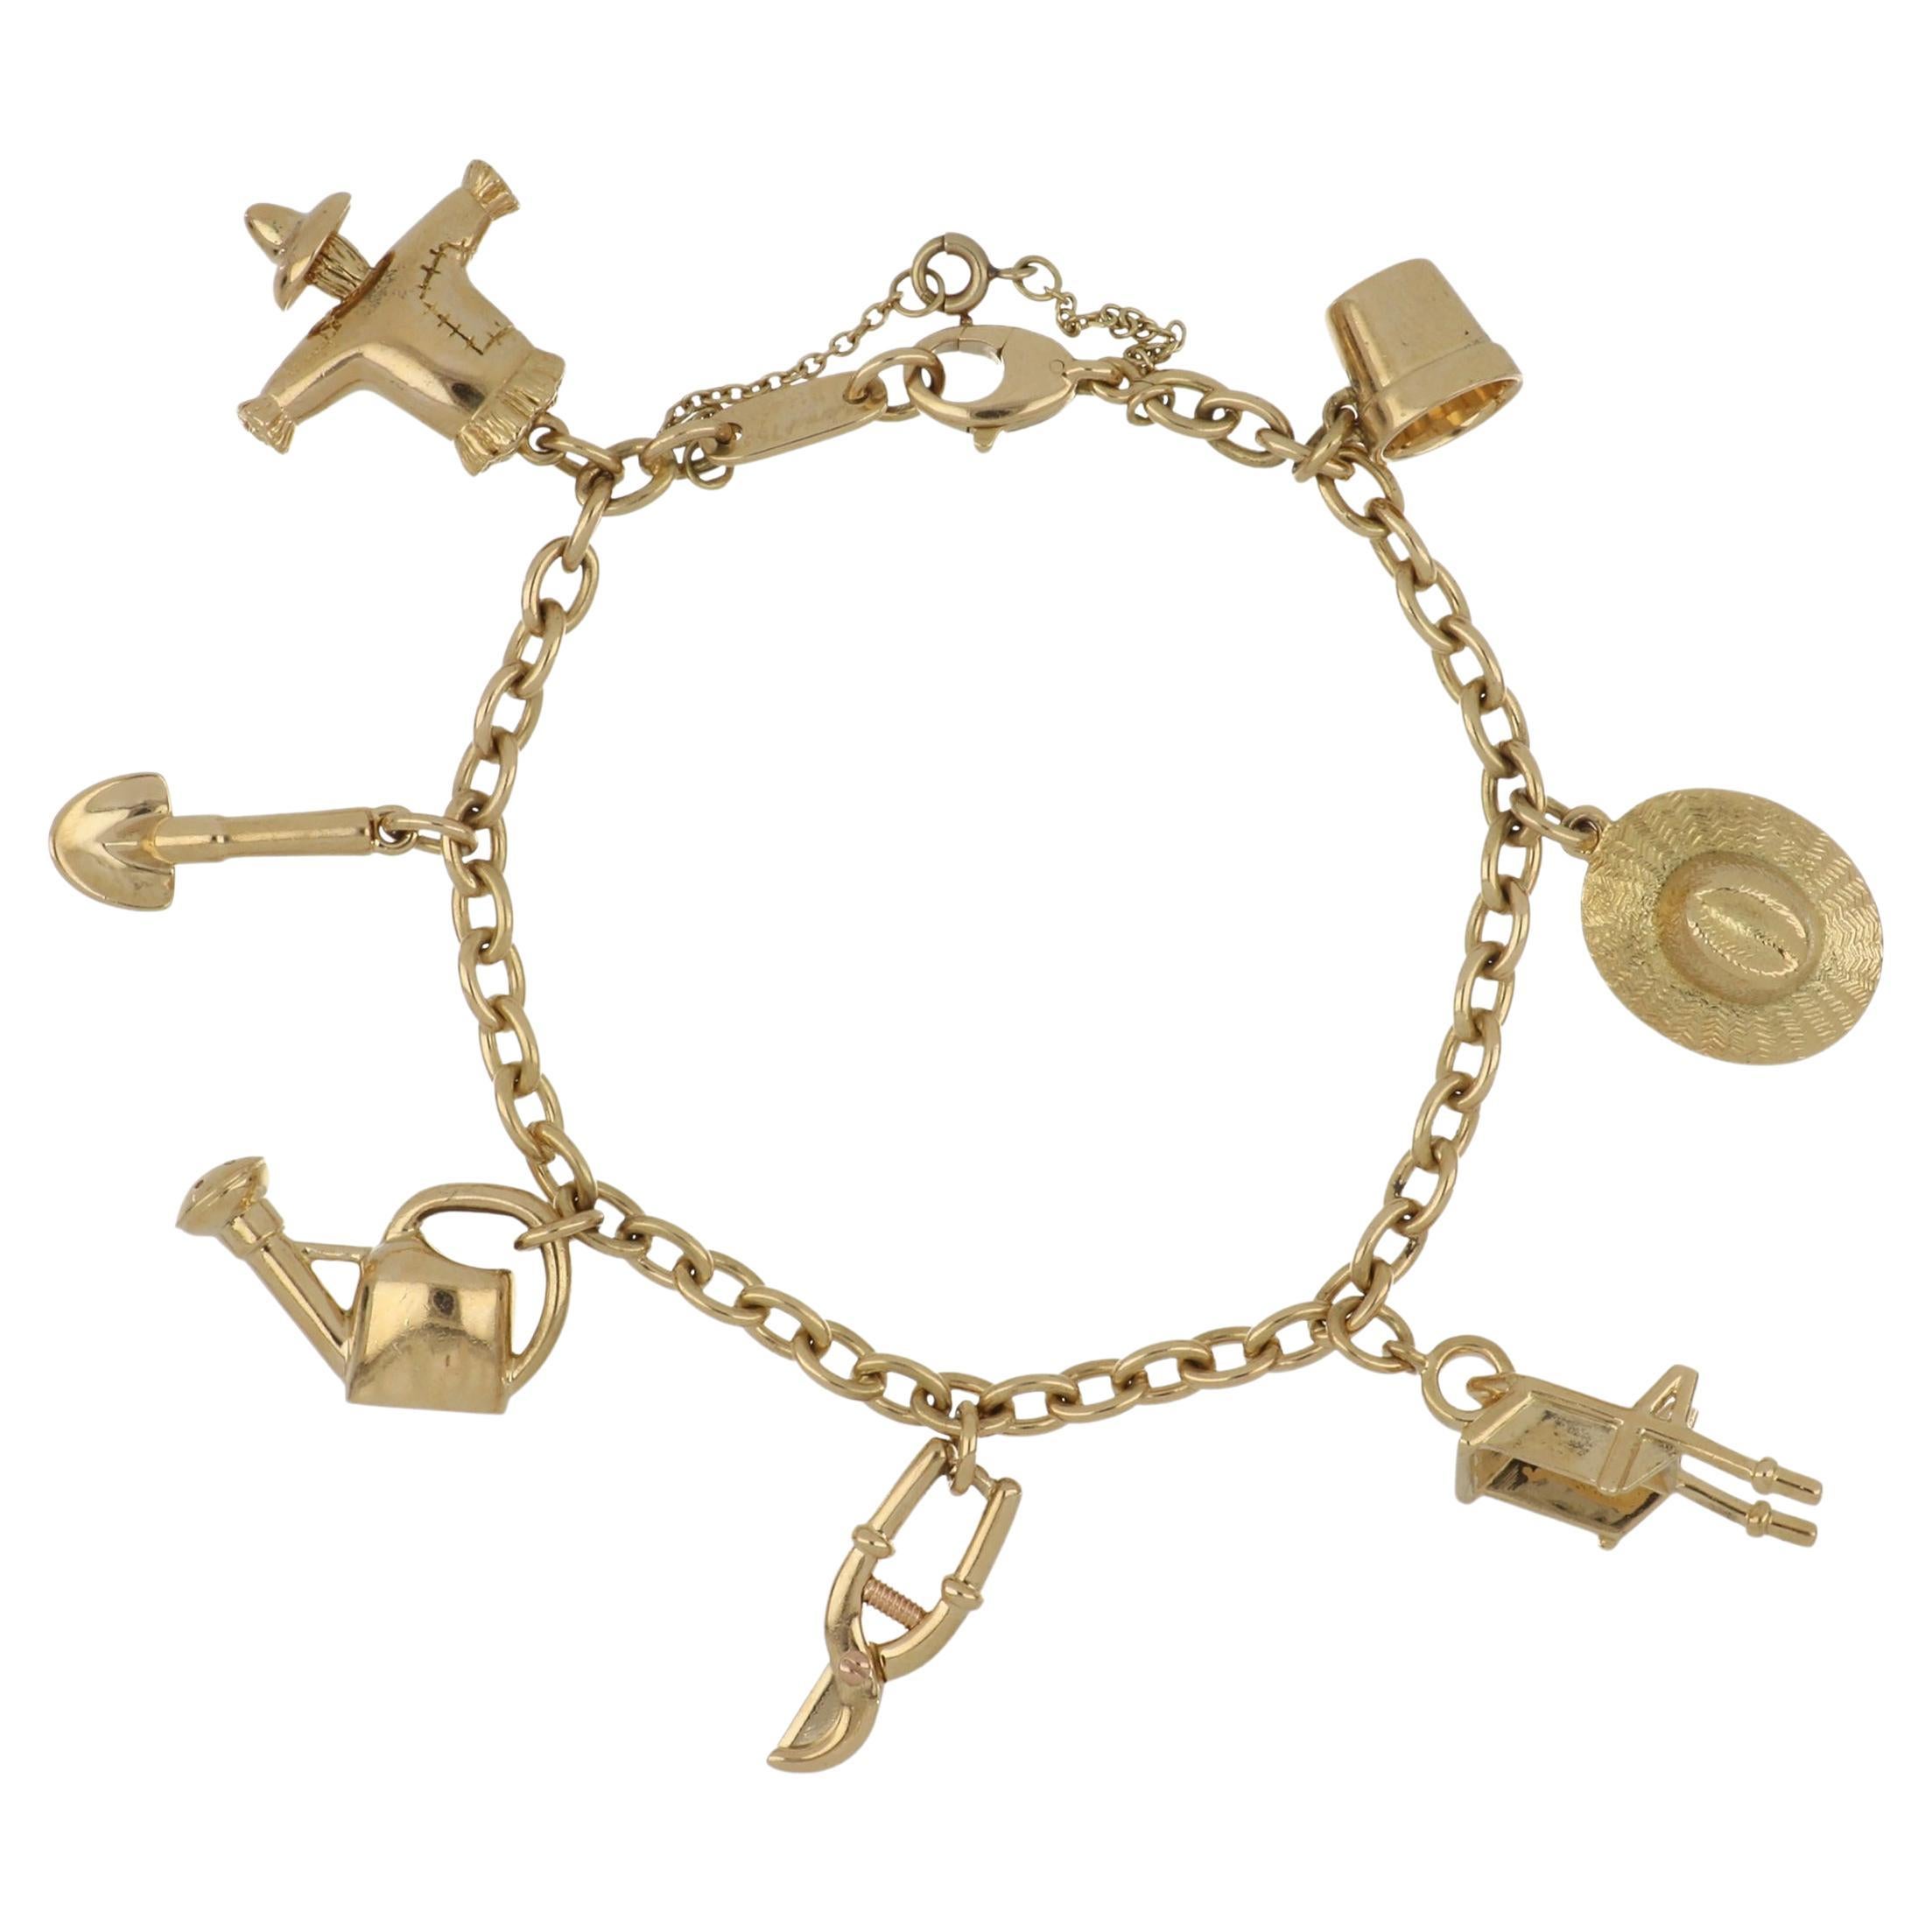 What gold is a Cartier bracelet?